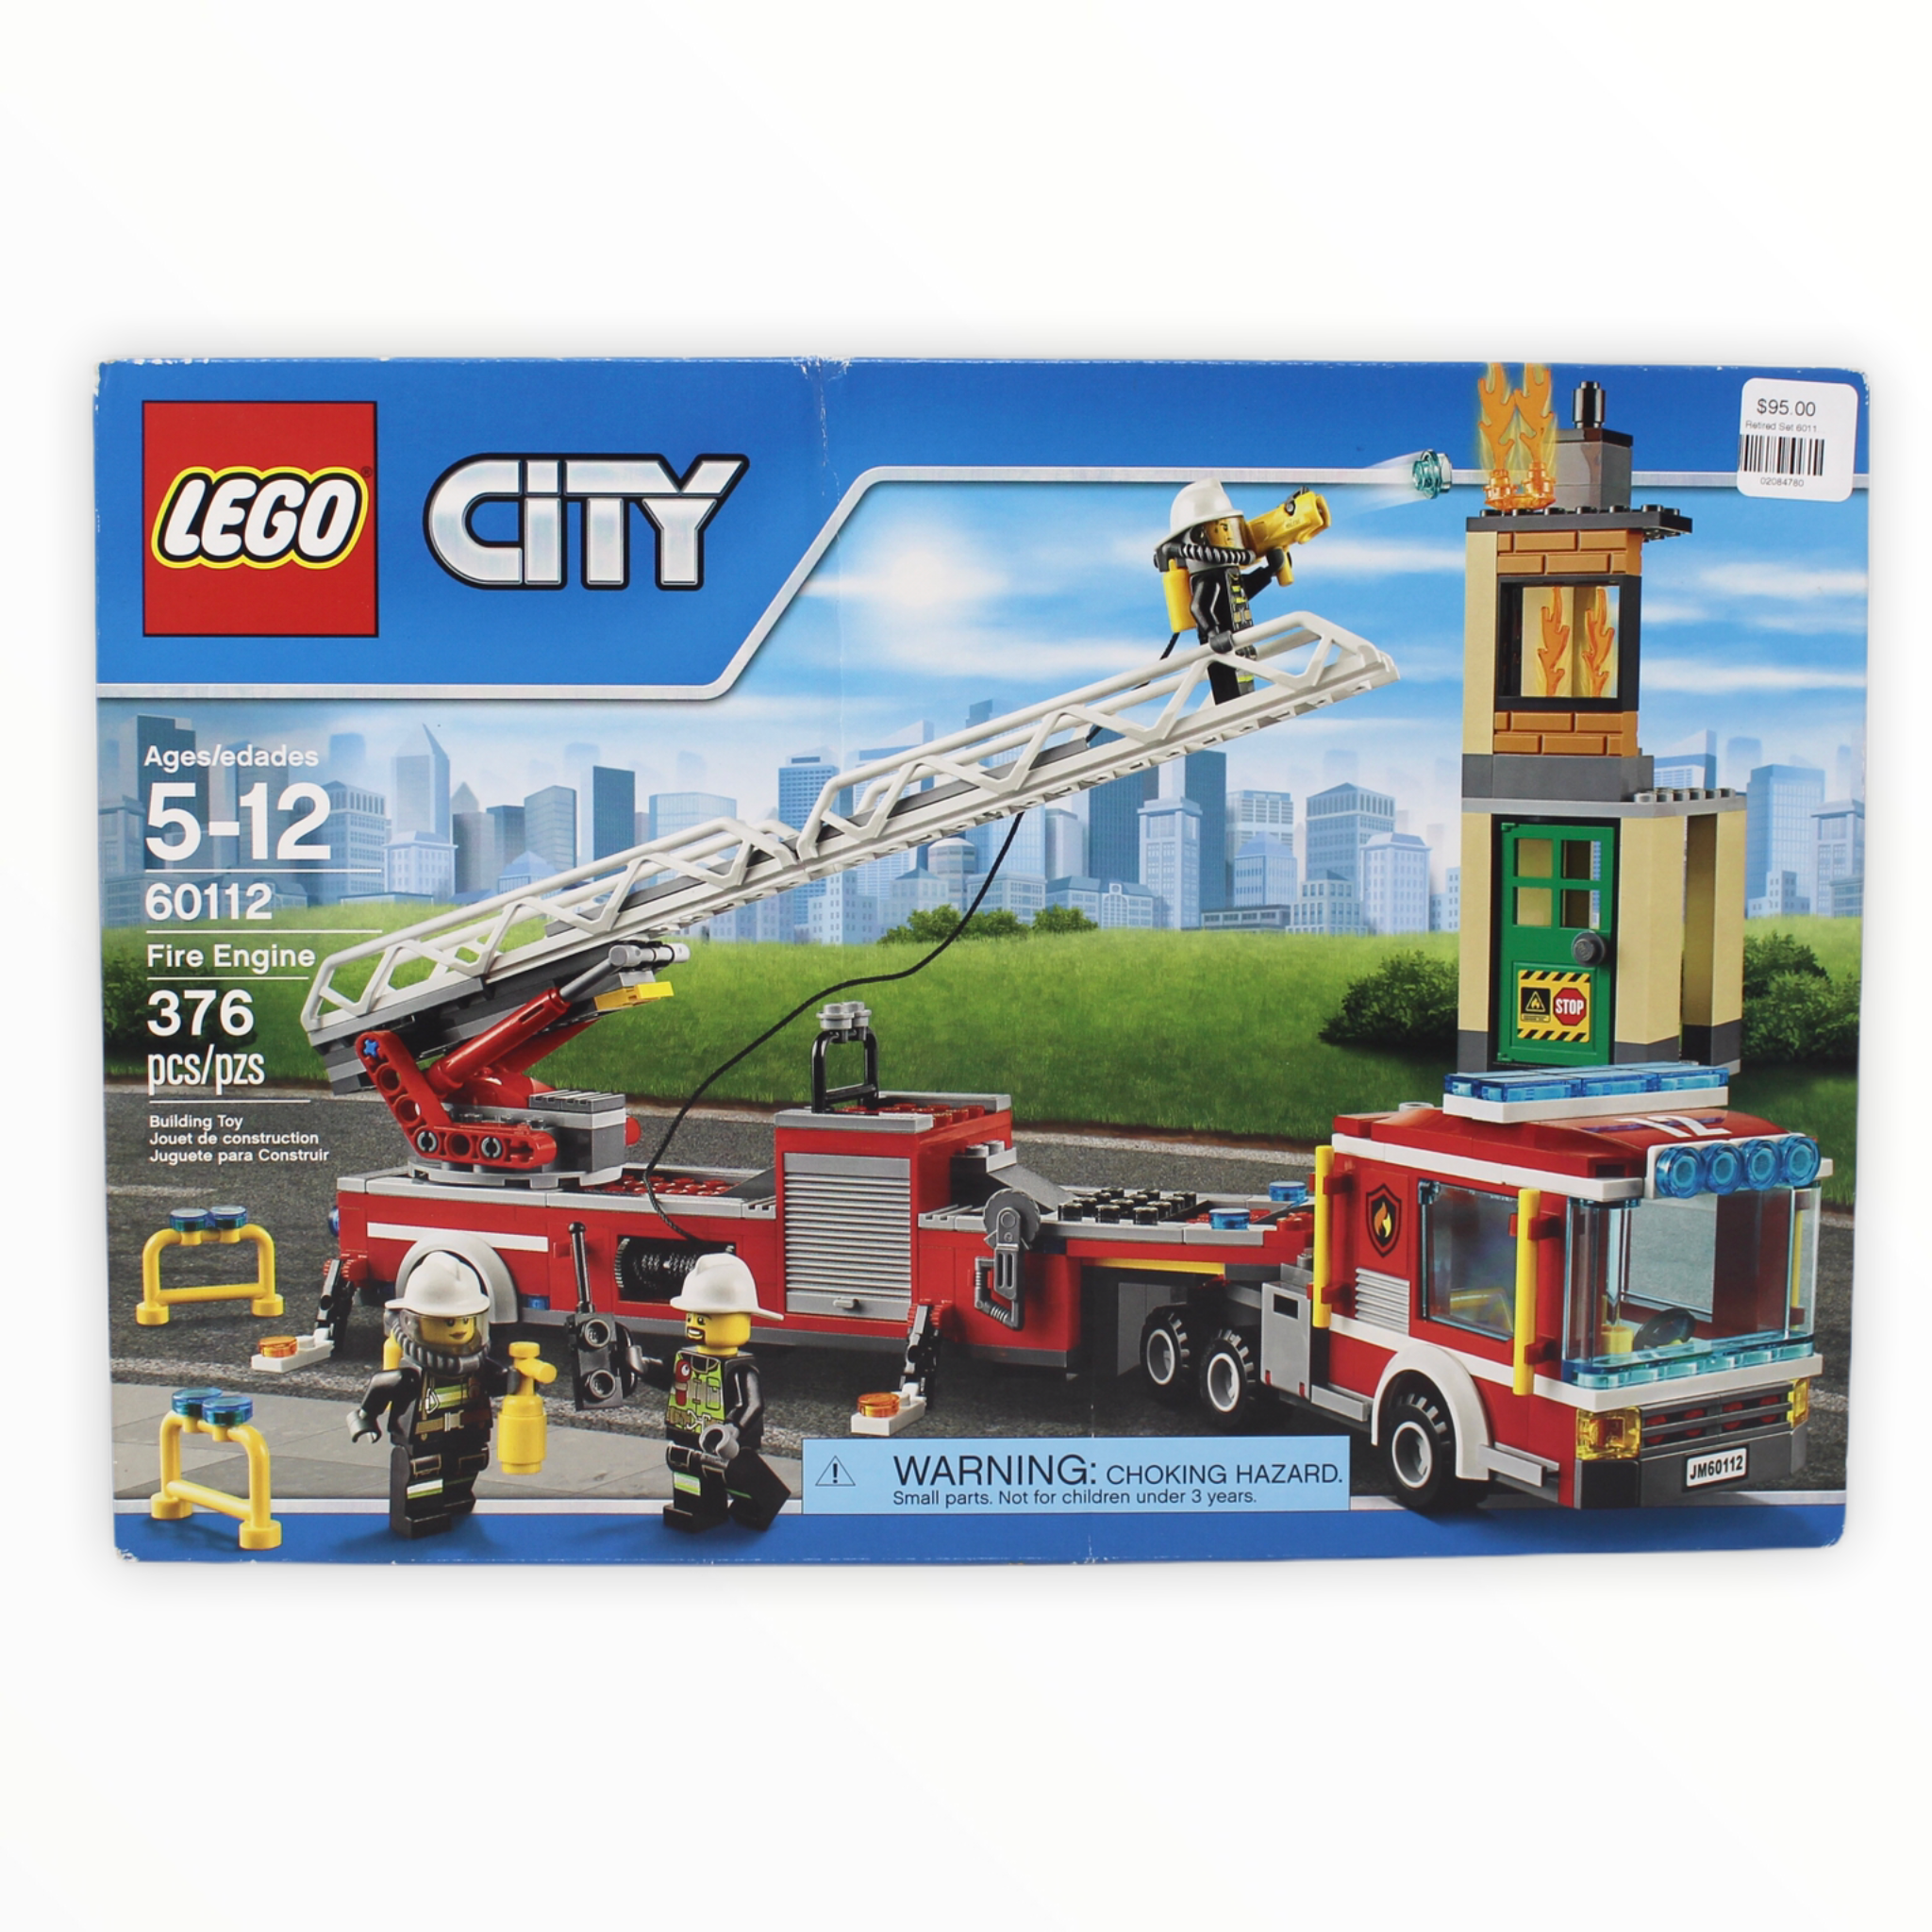 Retired Set 60112 City Fire Engine